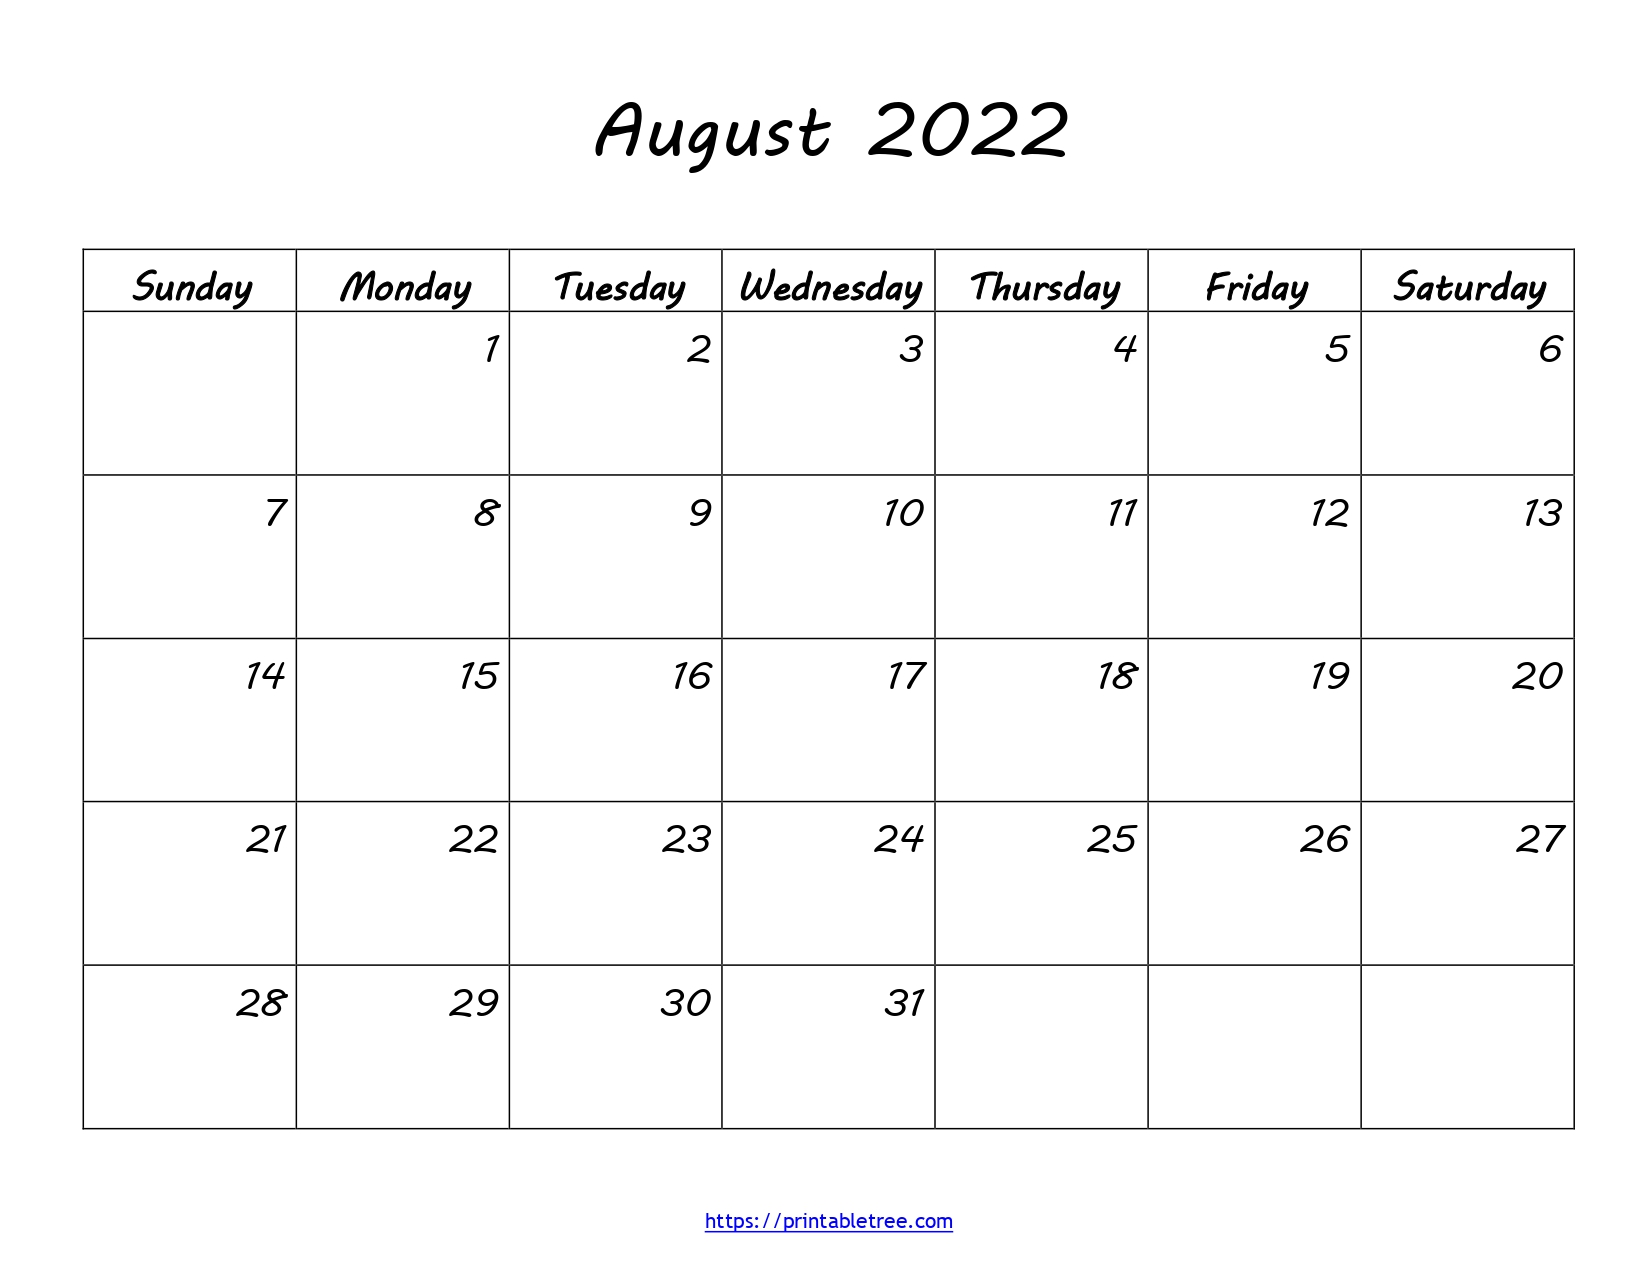 Free Printable August 2022 Calendars Wiki Calendar Free Printable August 2022 Calendar Instant